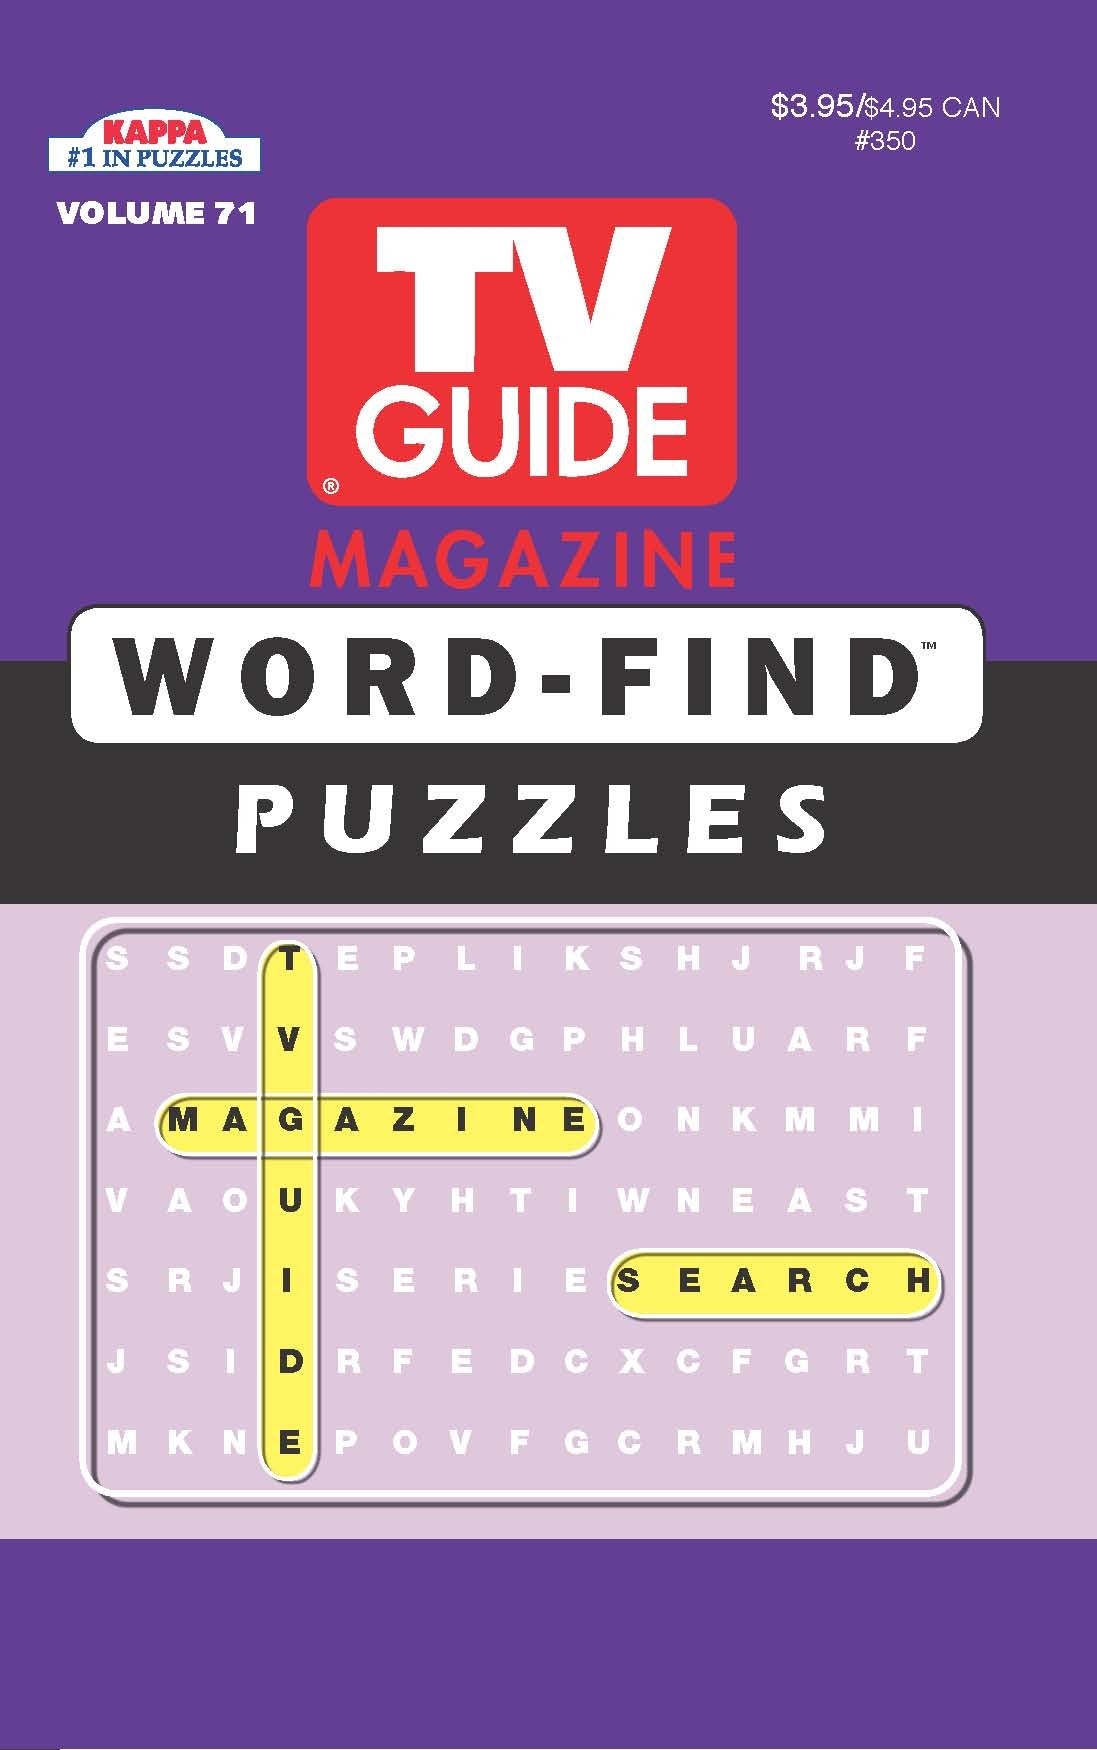 TV Guide Word Find Puzzle Book Vol 64 Kappa Books Publishers 9781559934466 Books Amazon ca